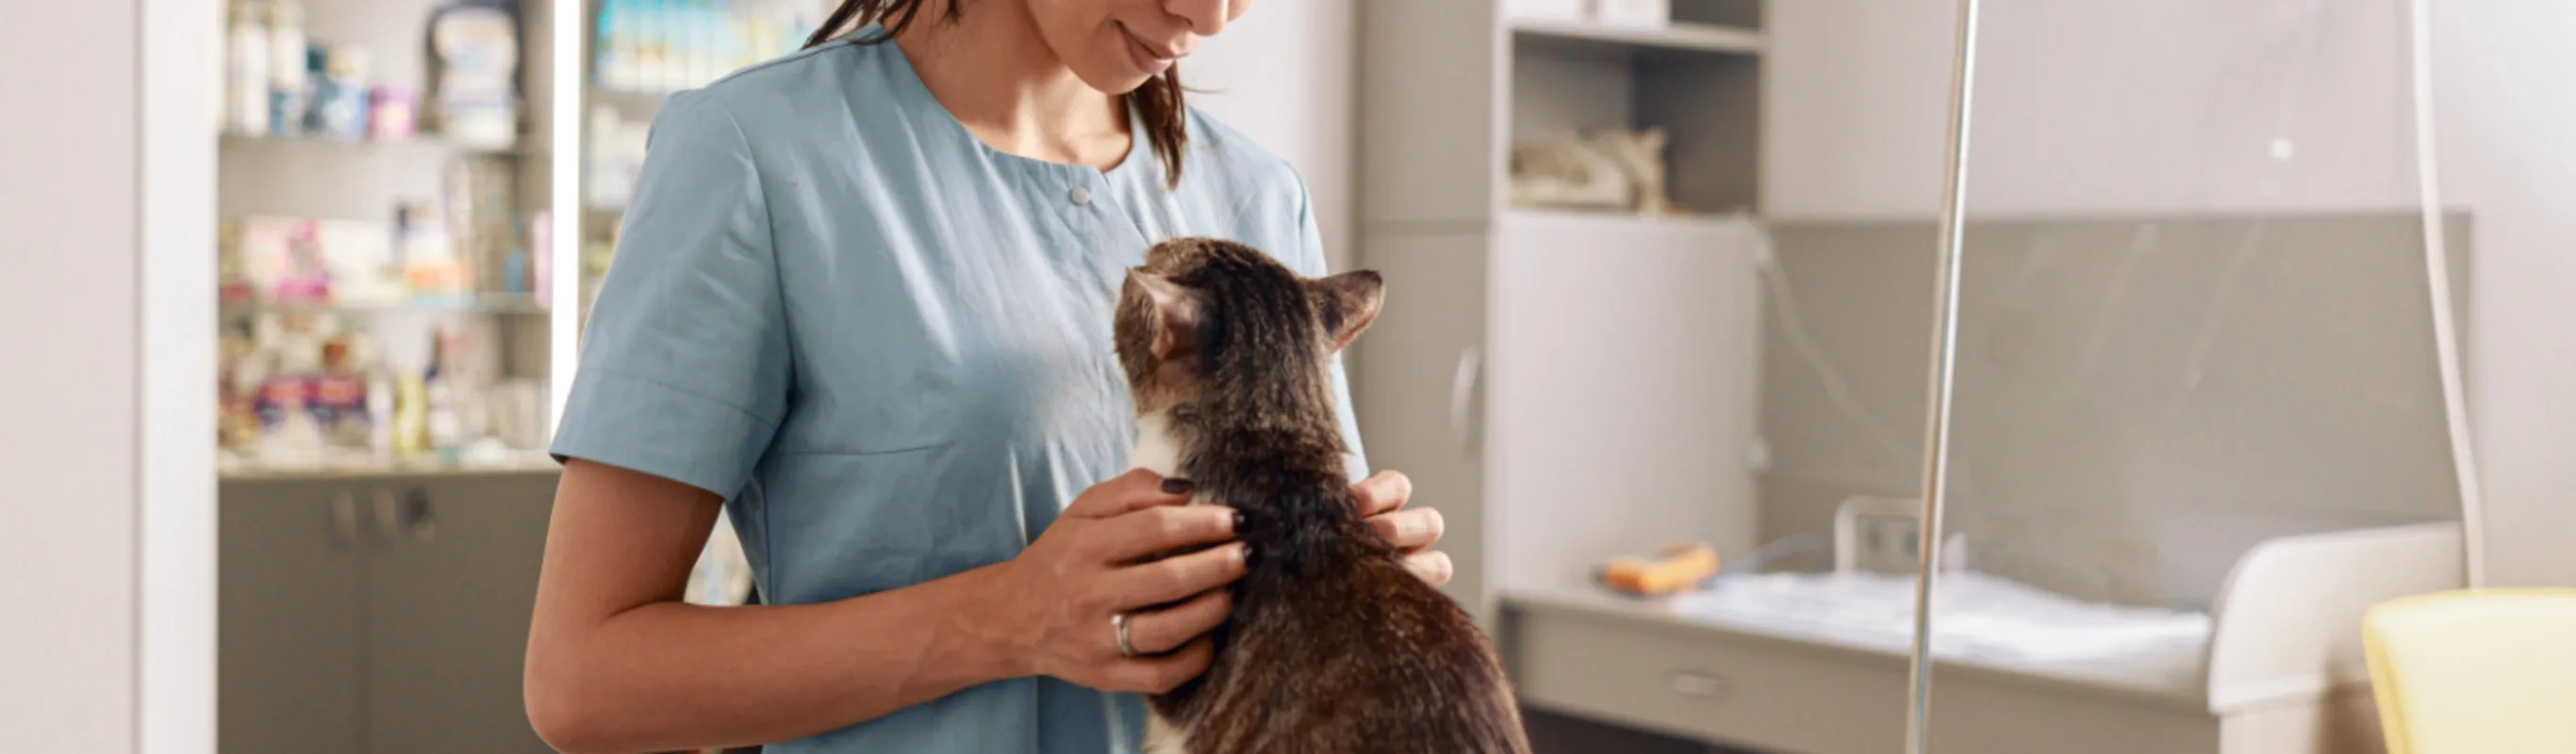 Veterinarian Examining a Brown Cat inside a Clinic